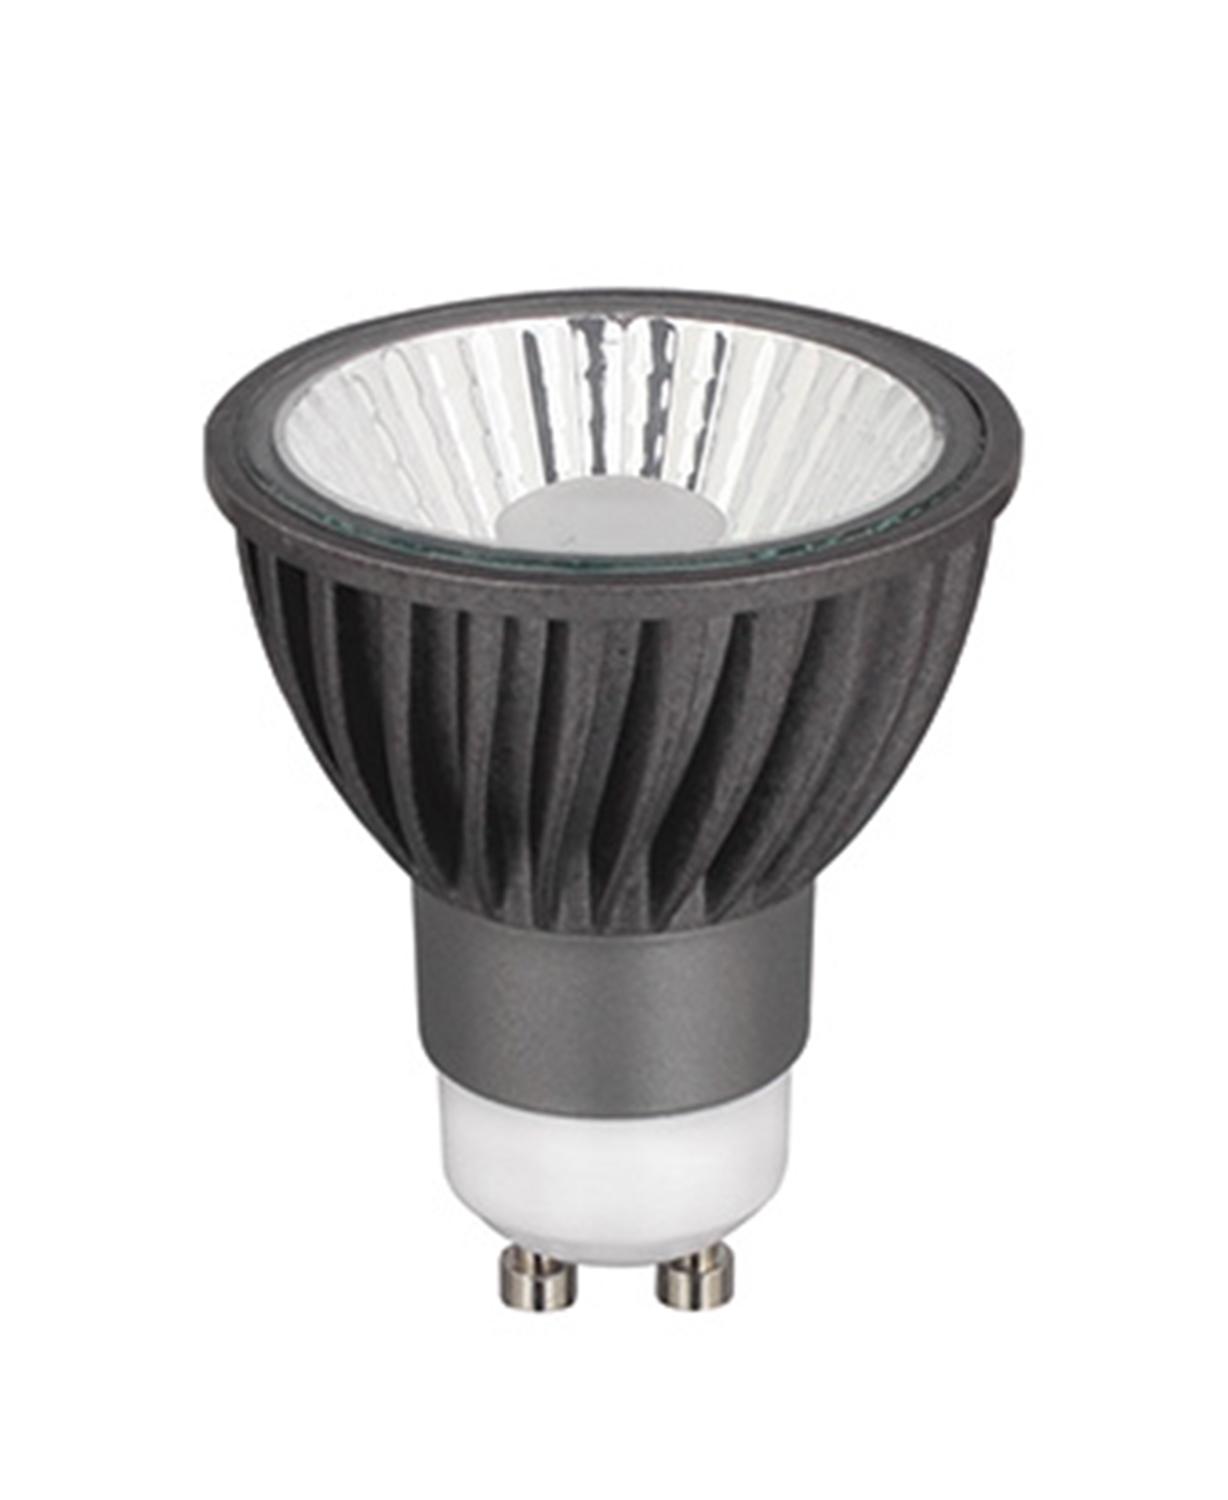 Civilight LED Reklektorlampen GU10 Dim-To-Warm